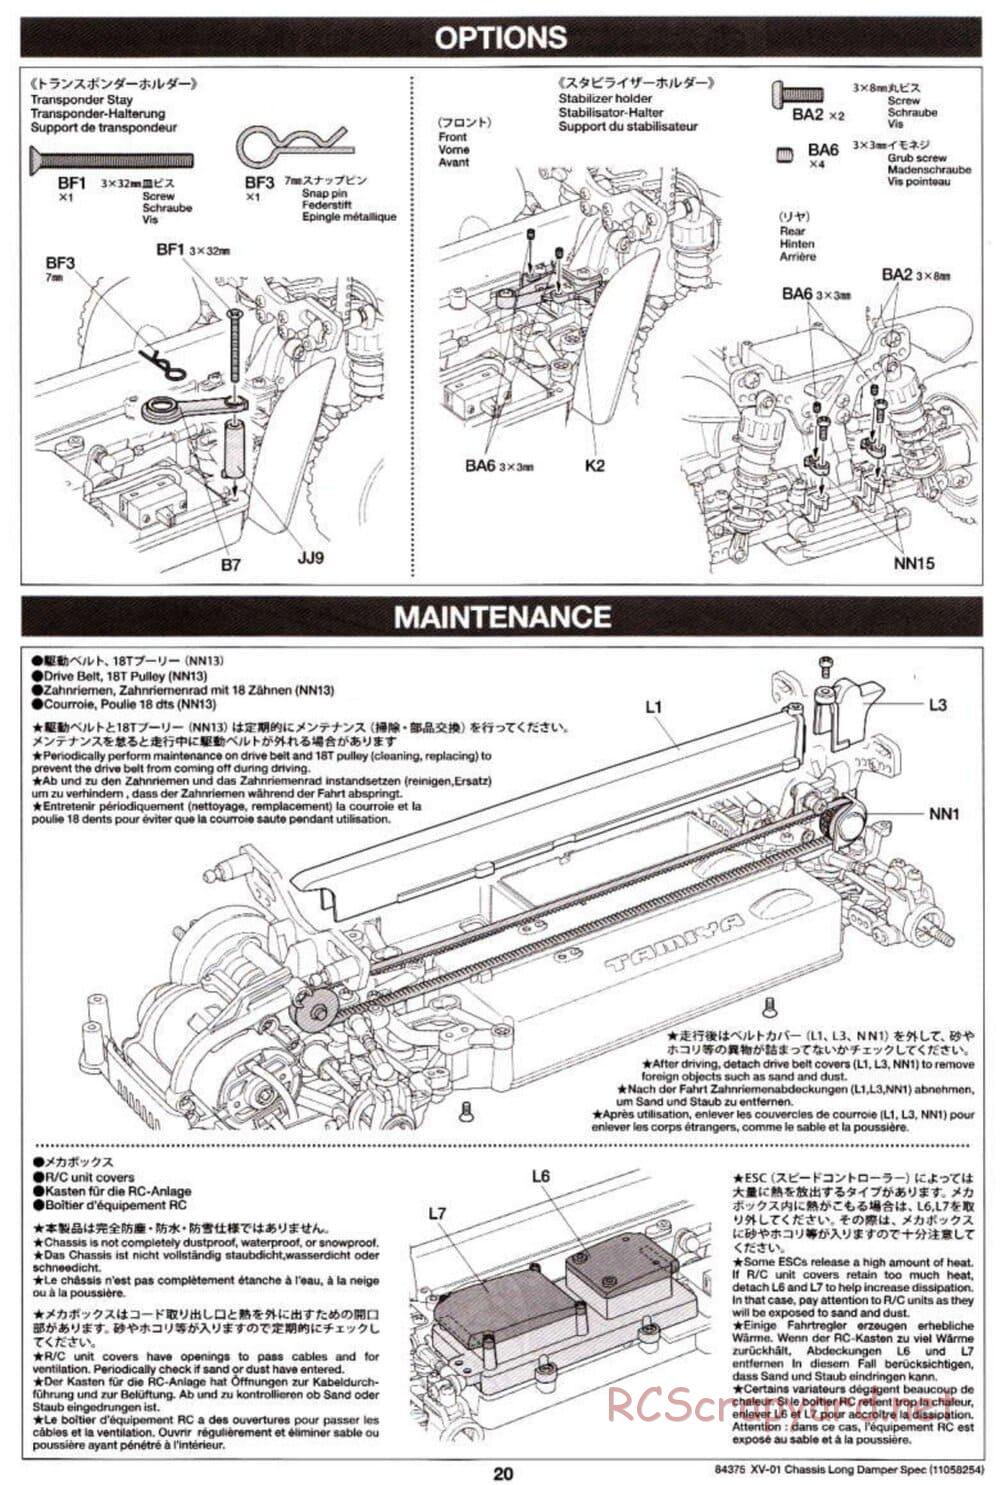 Tamiya - XV-01 Long Damper Spec Chassis - Manual - Page 20